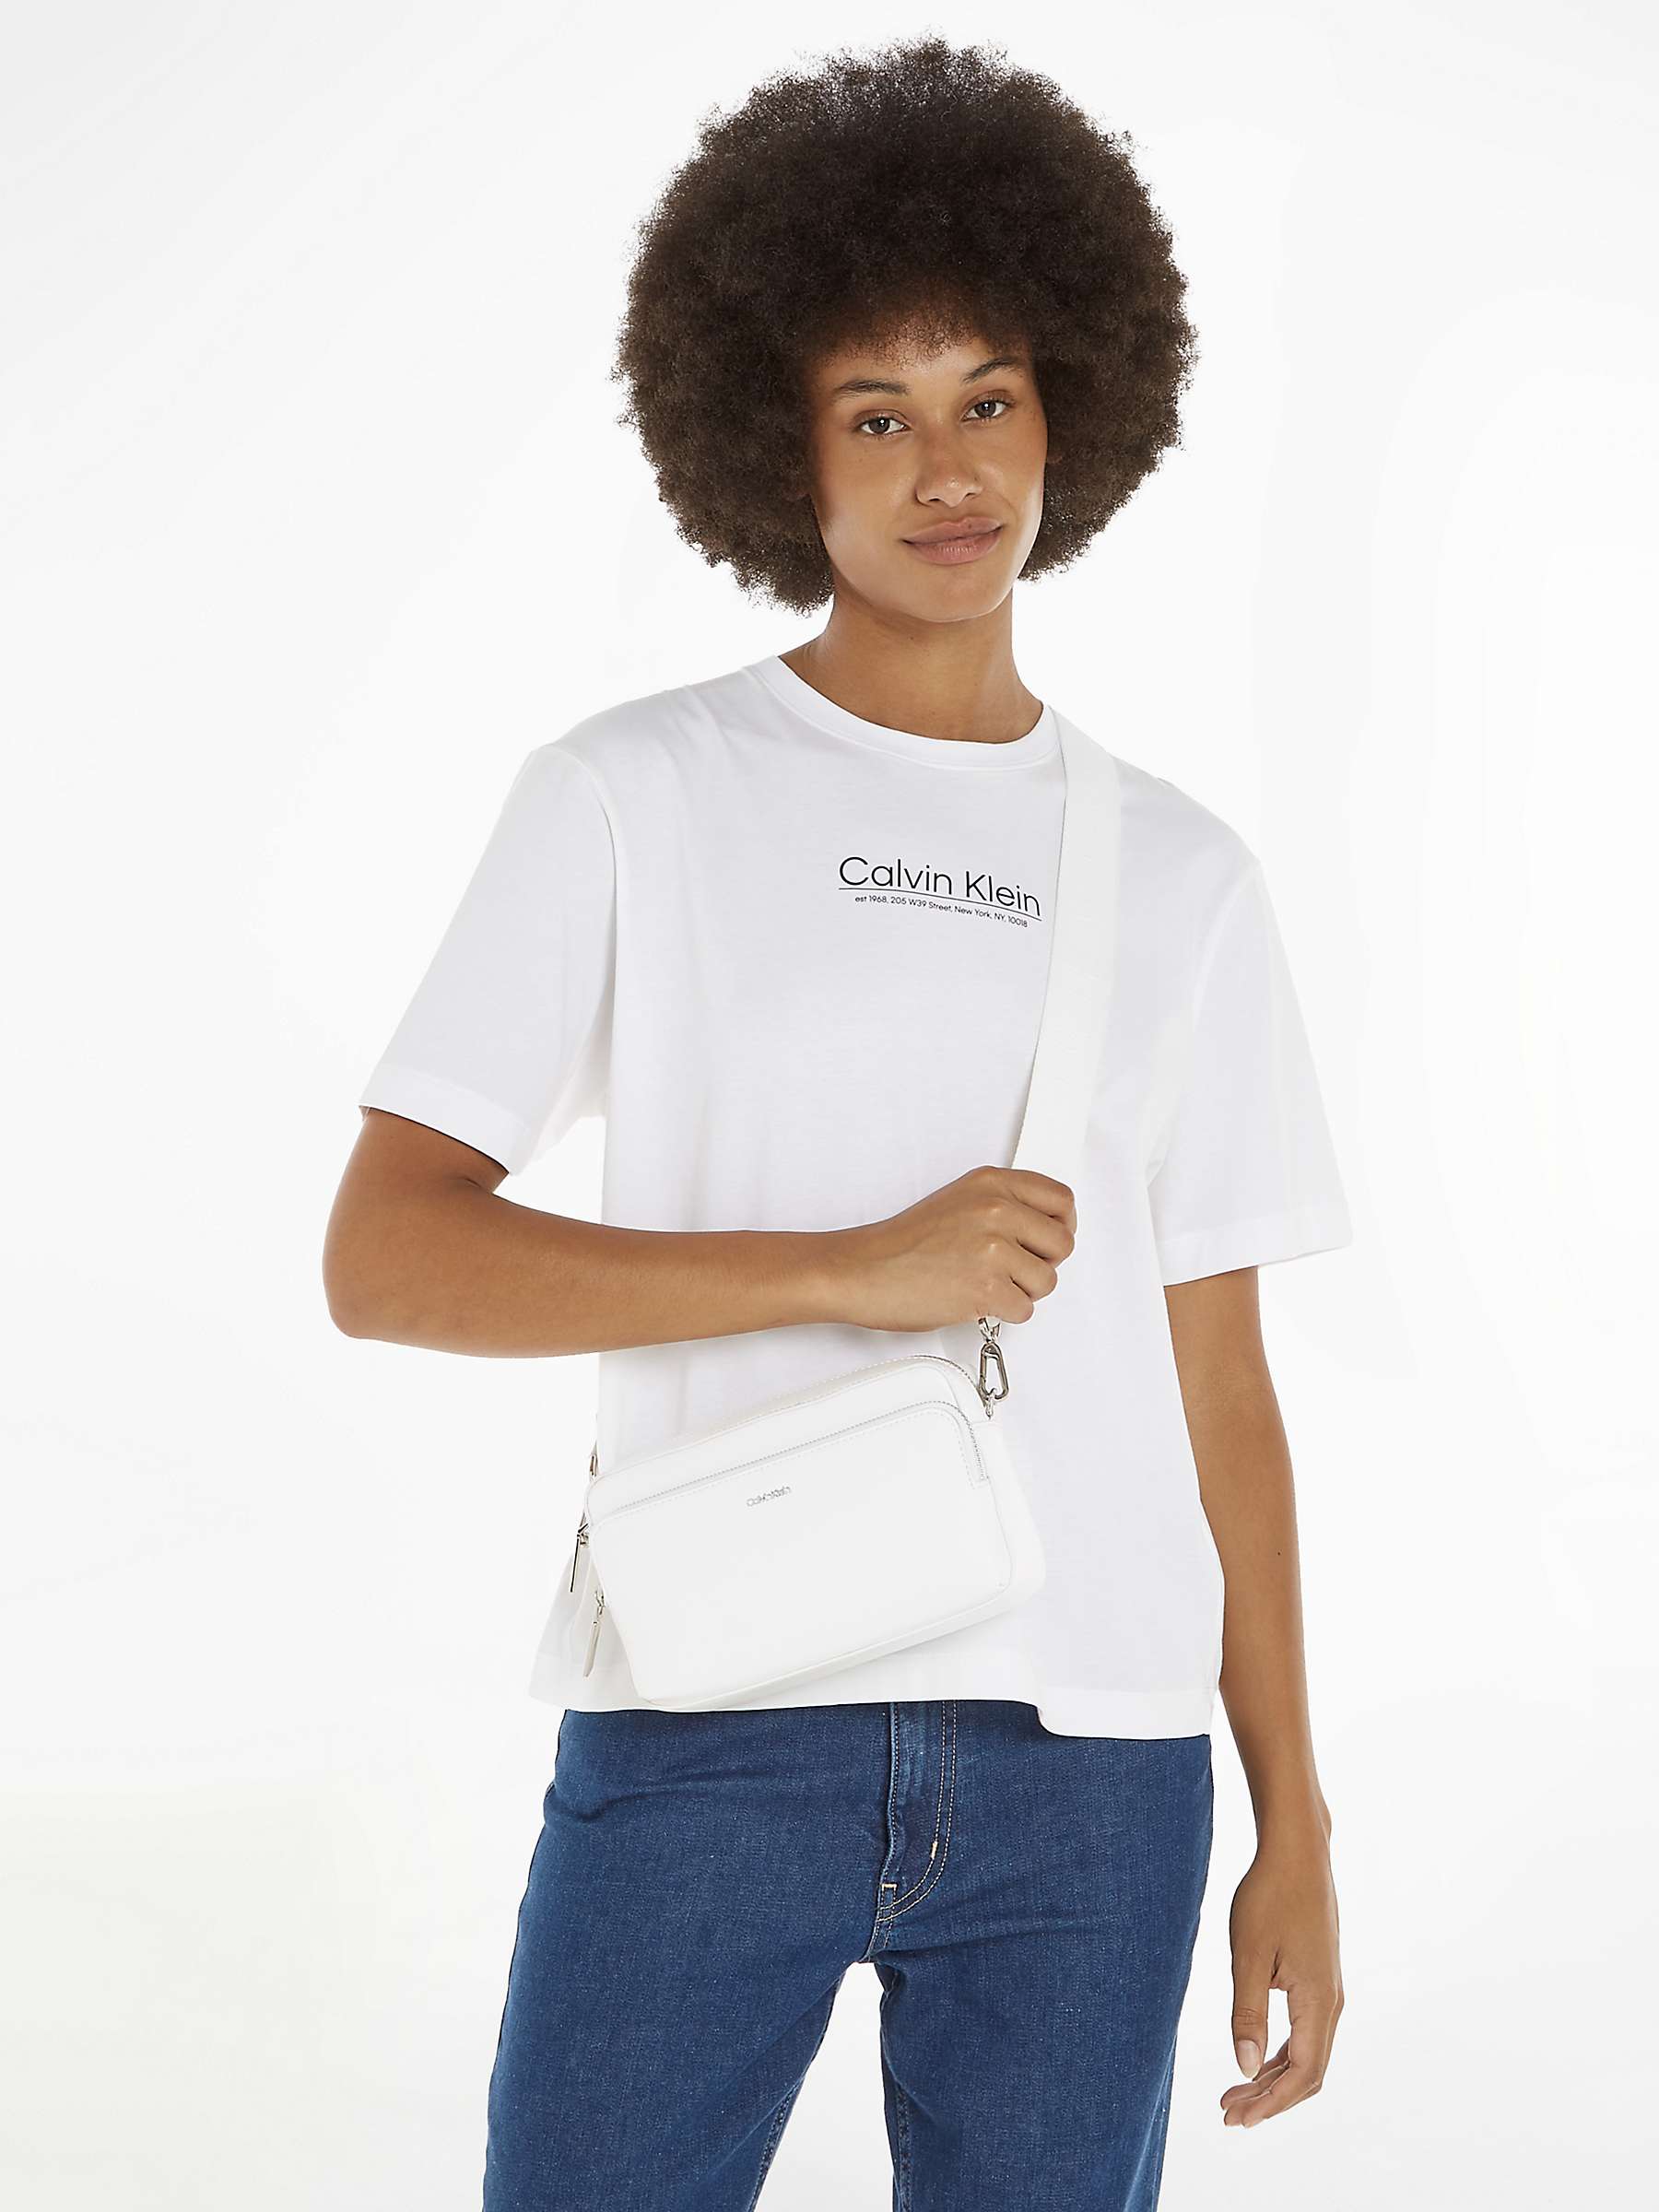 Buy Calvin Klein Cross Body Camera Bag, Bright White Online at johnlewis.com